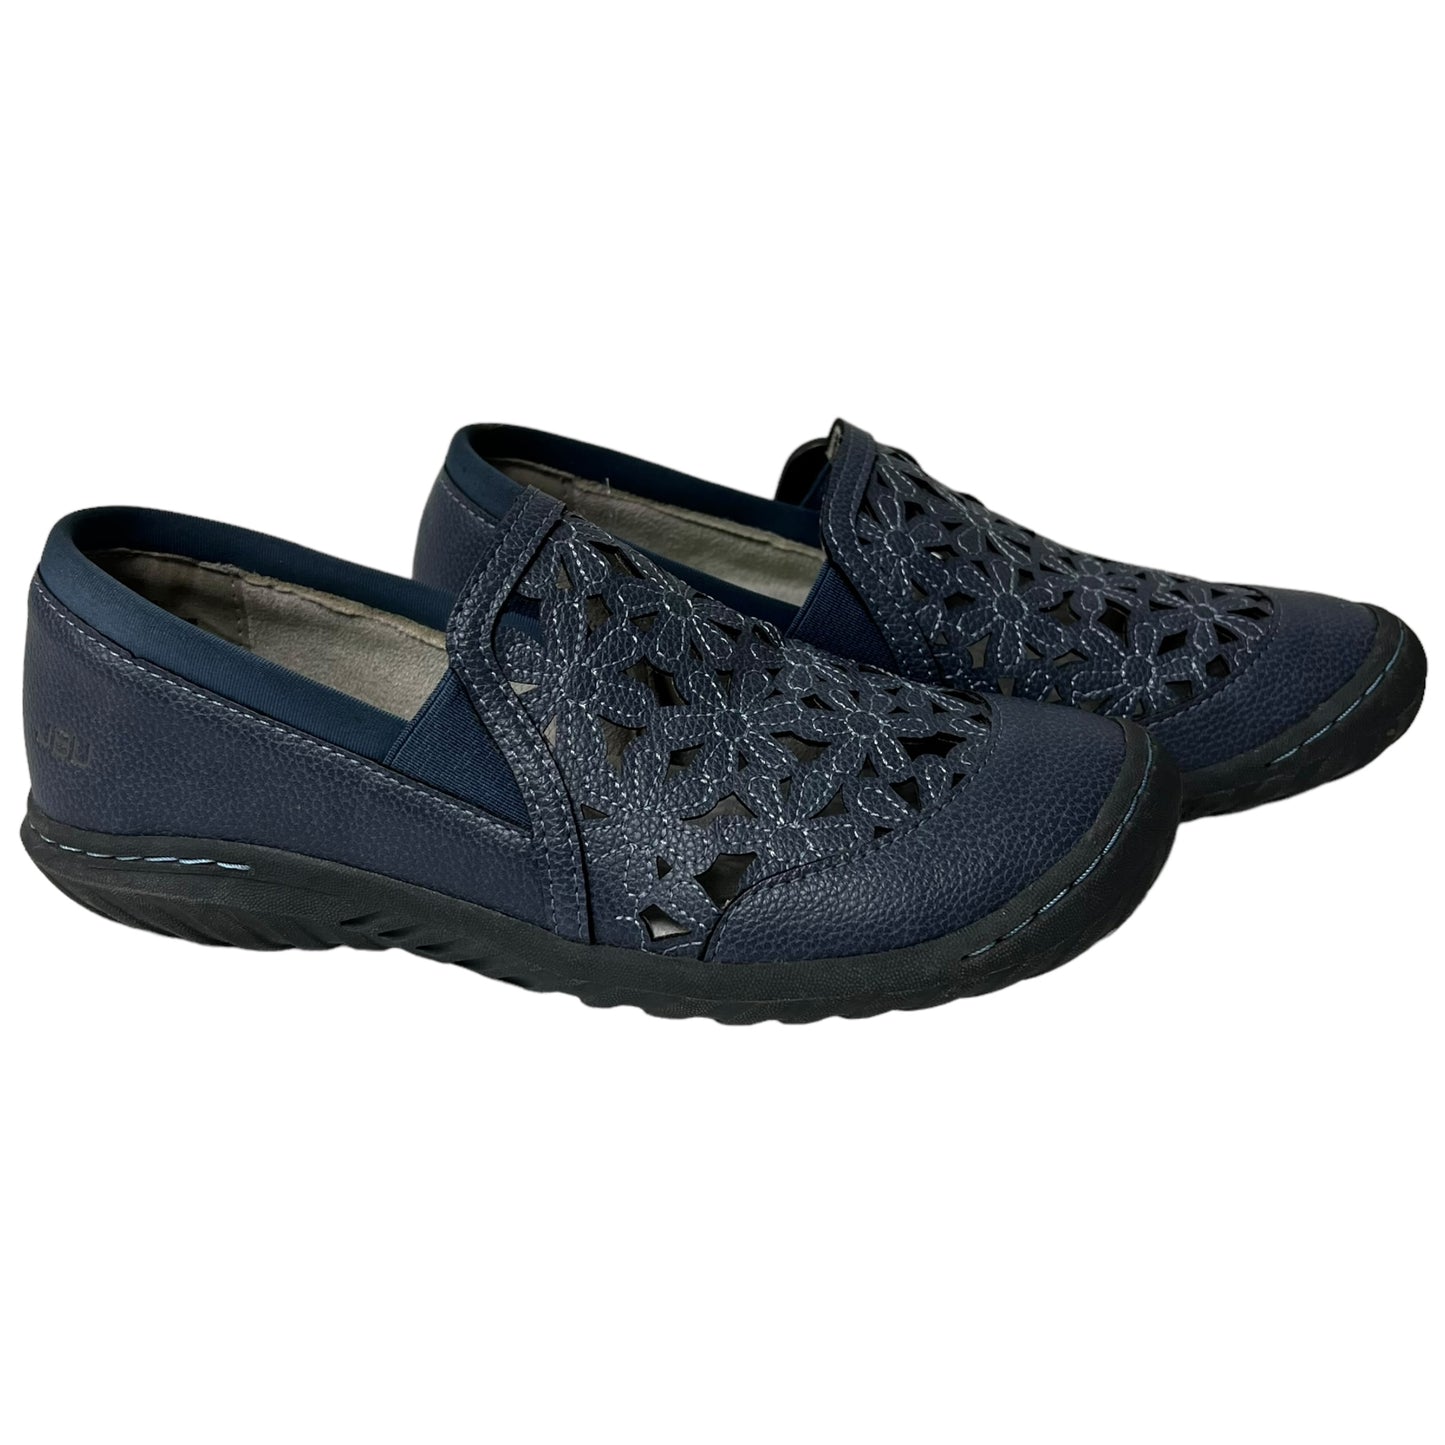 Shoes Flats Loafer Oxford By Jambu  Size: 6.5